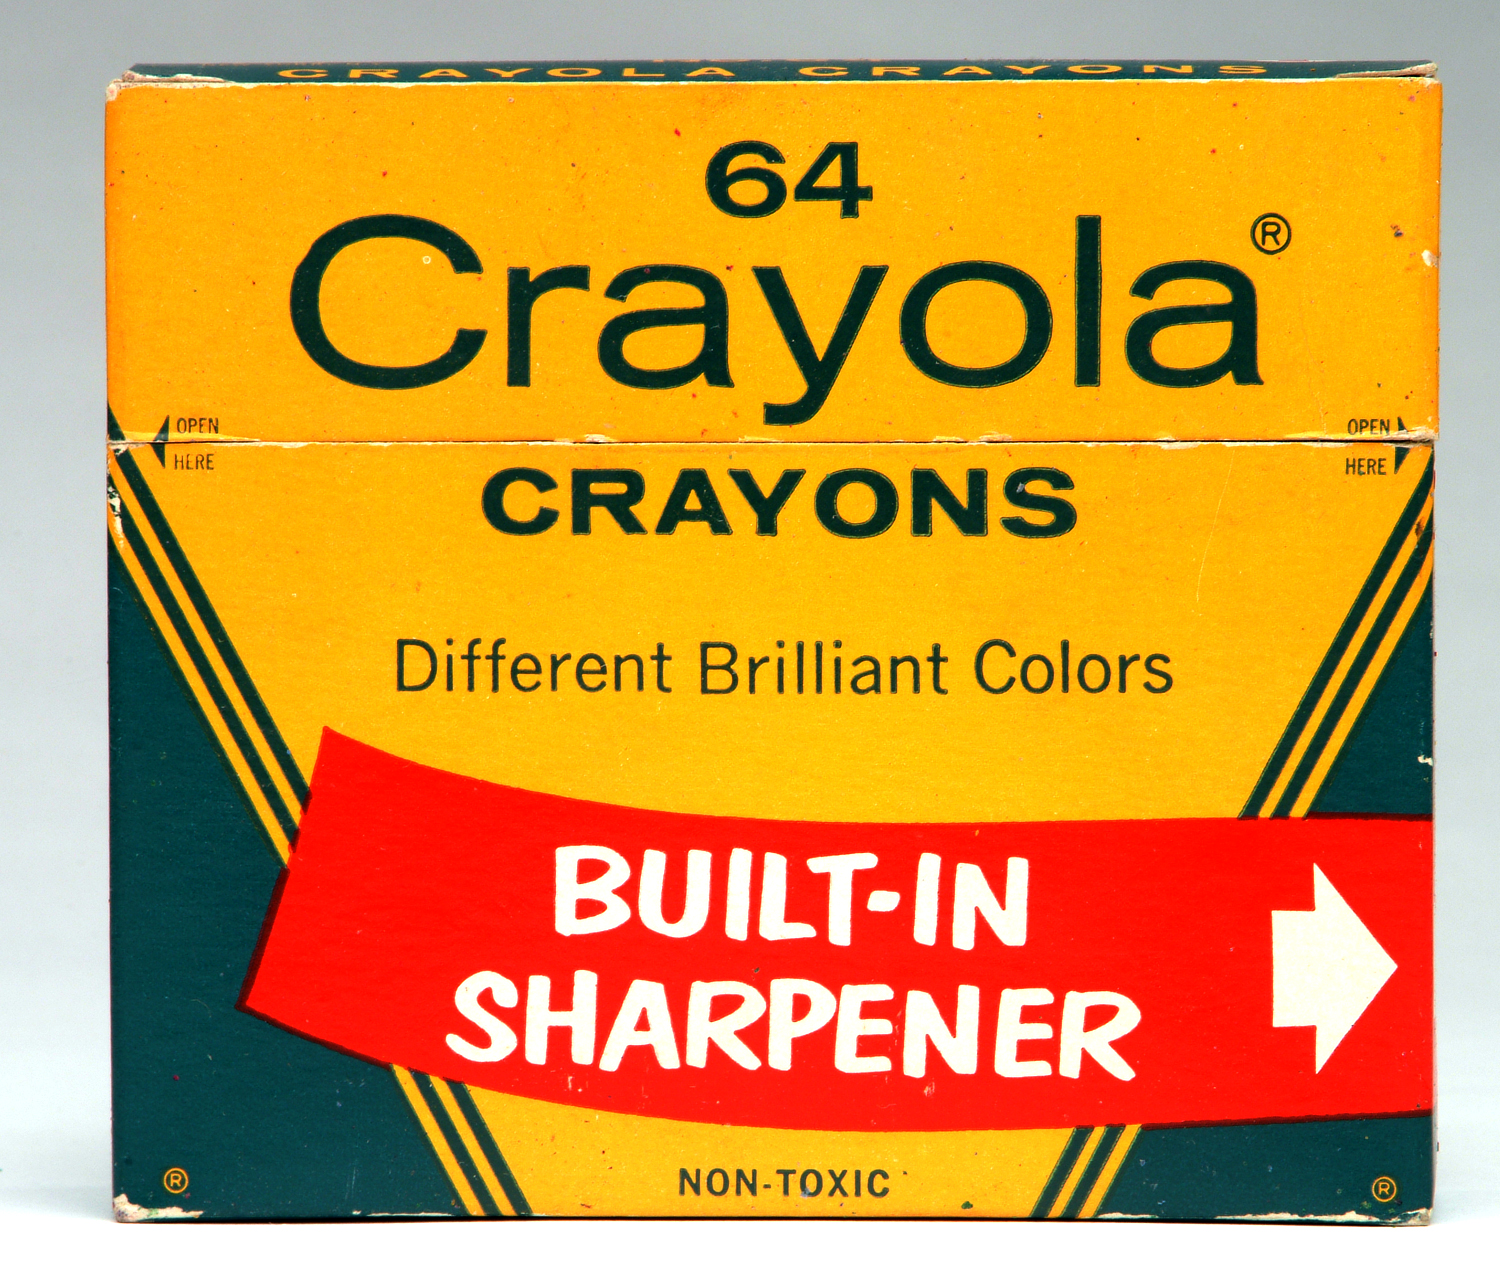 Crayola Crayon Sharpener